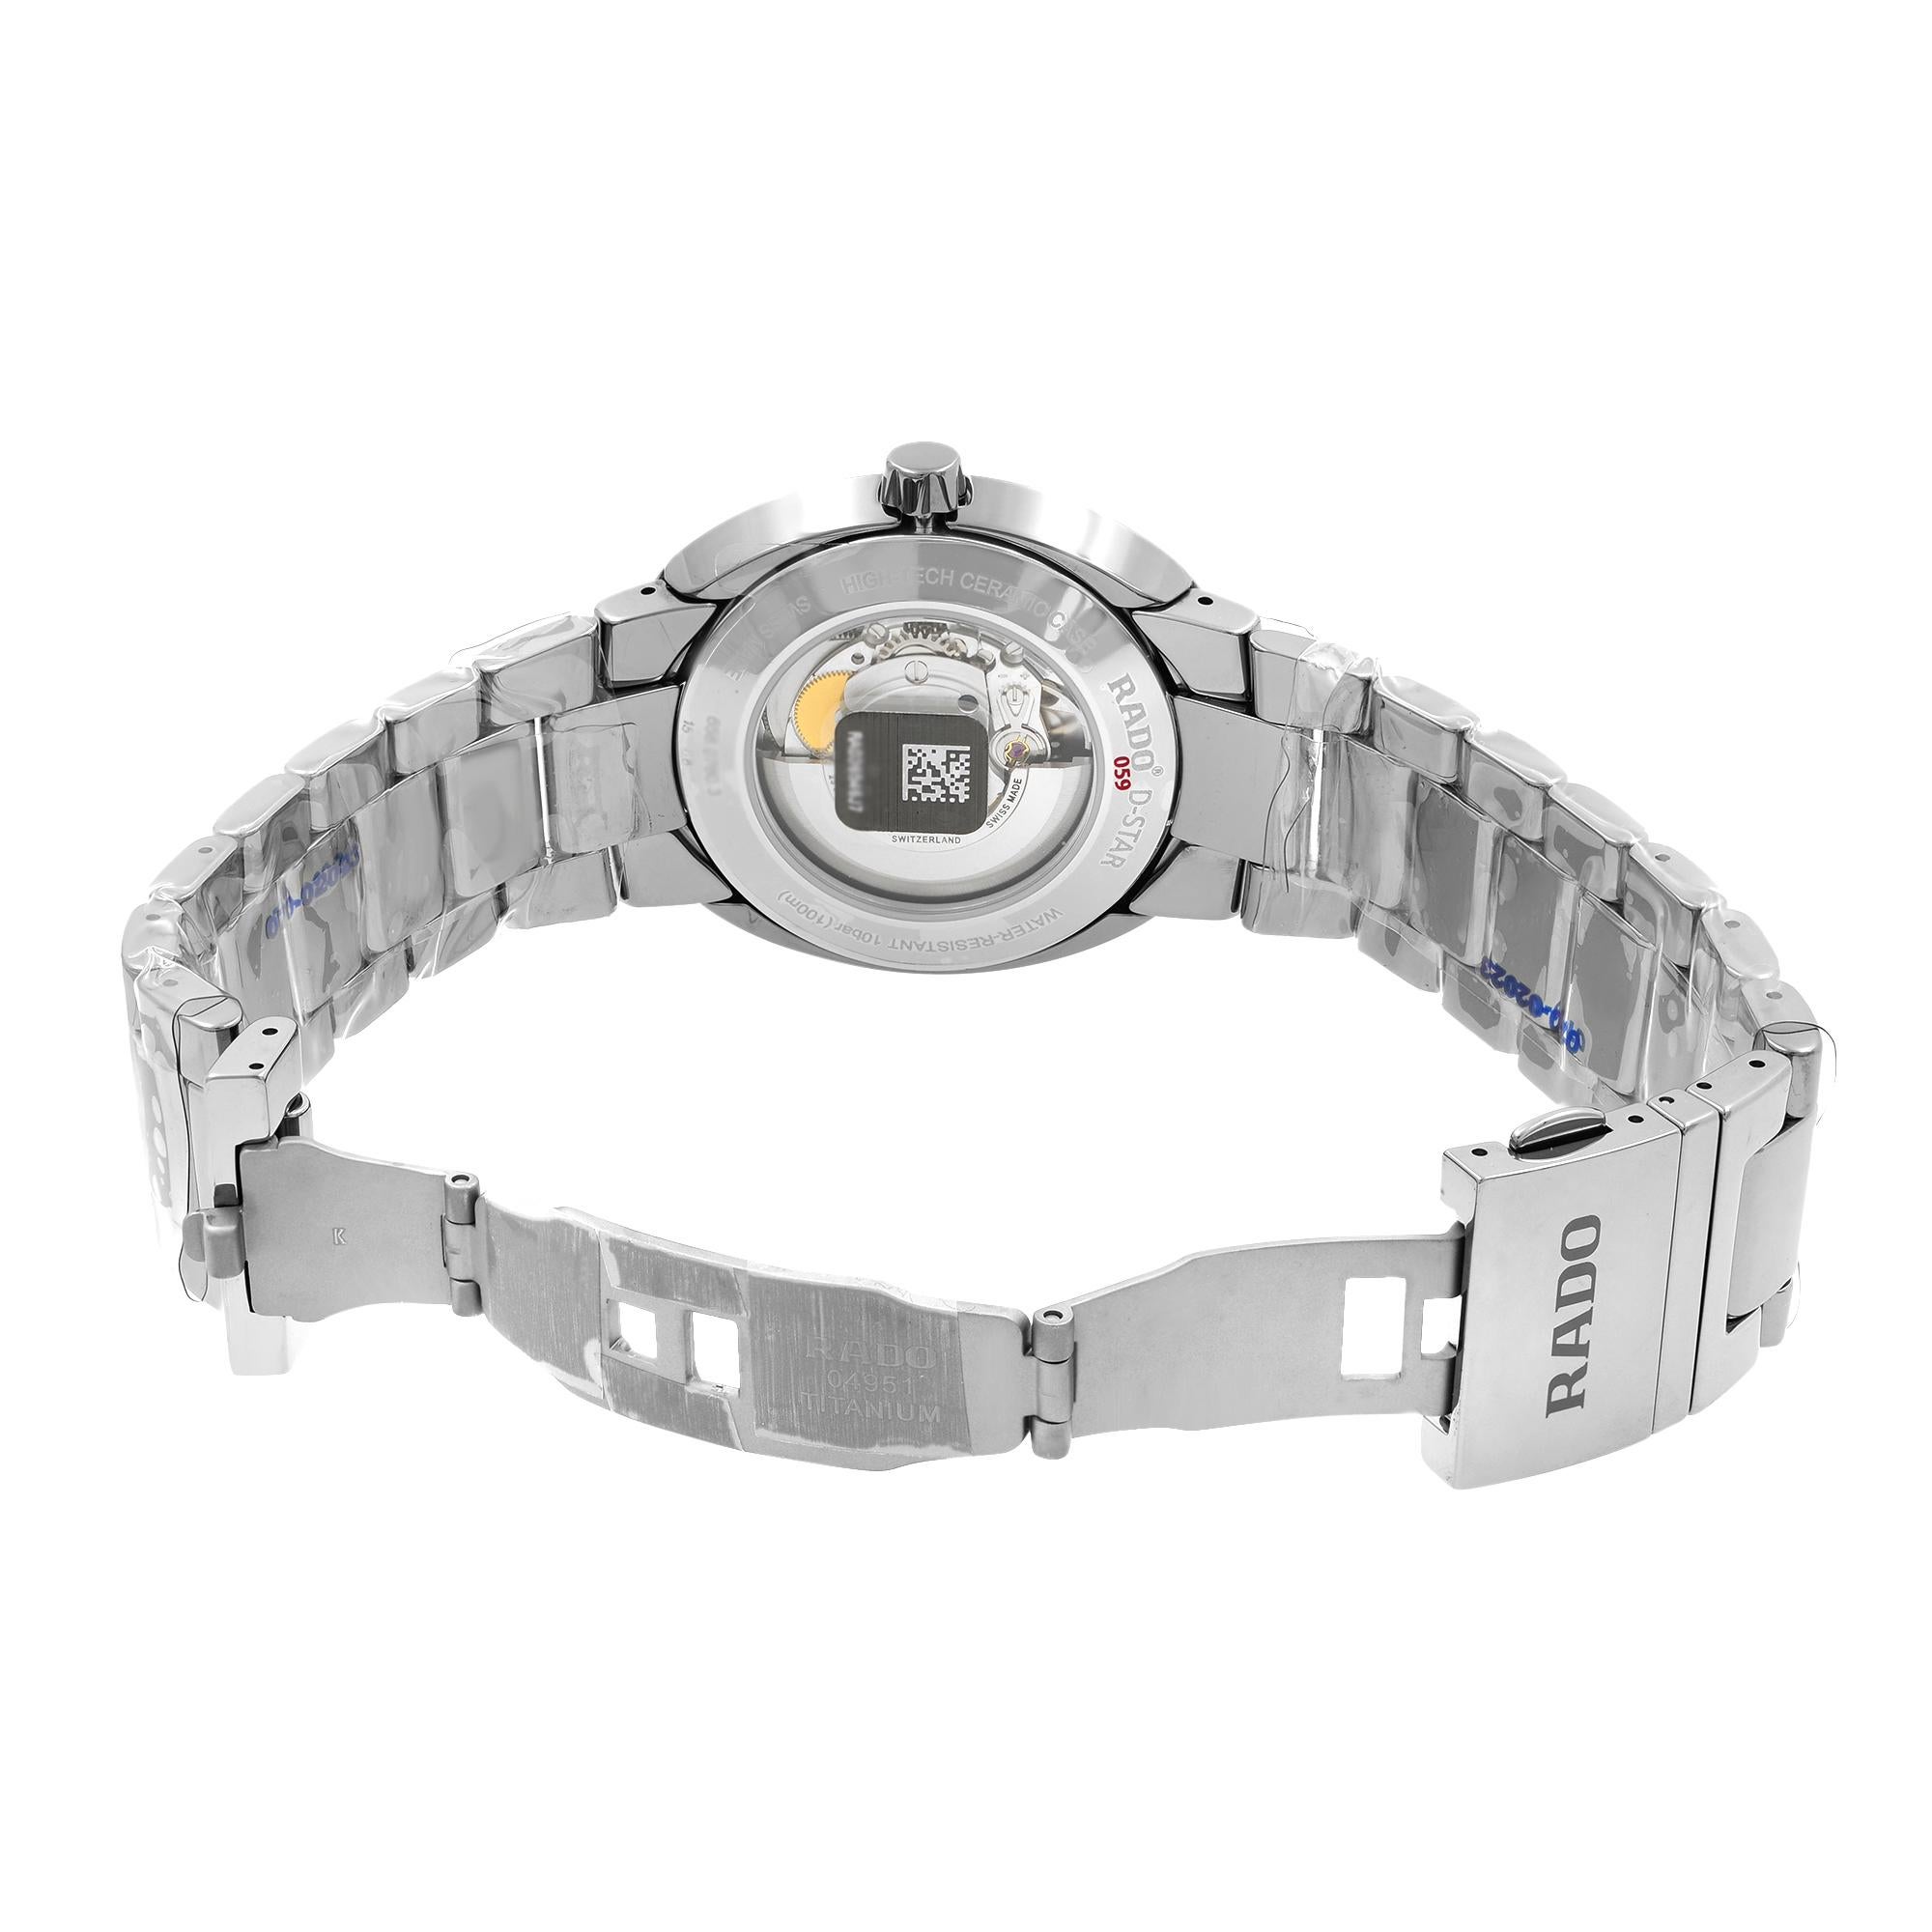 Rado D-Star Automatic Grey Dial Ceramic Men's Watch R15760112 3